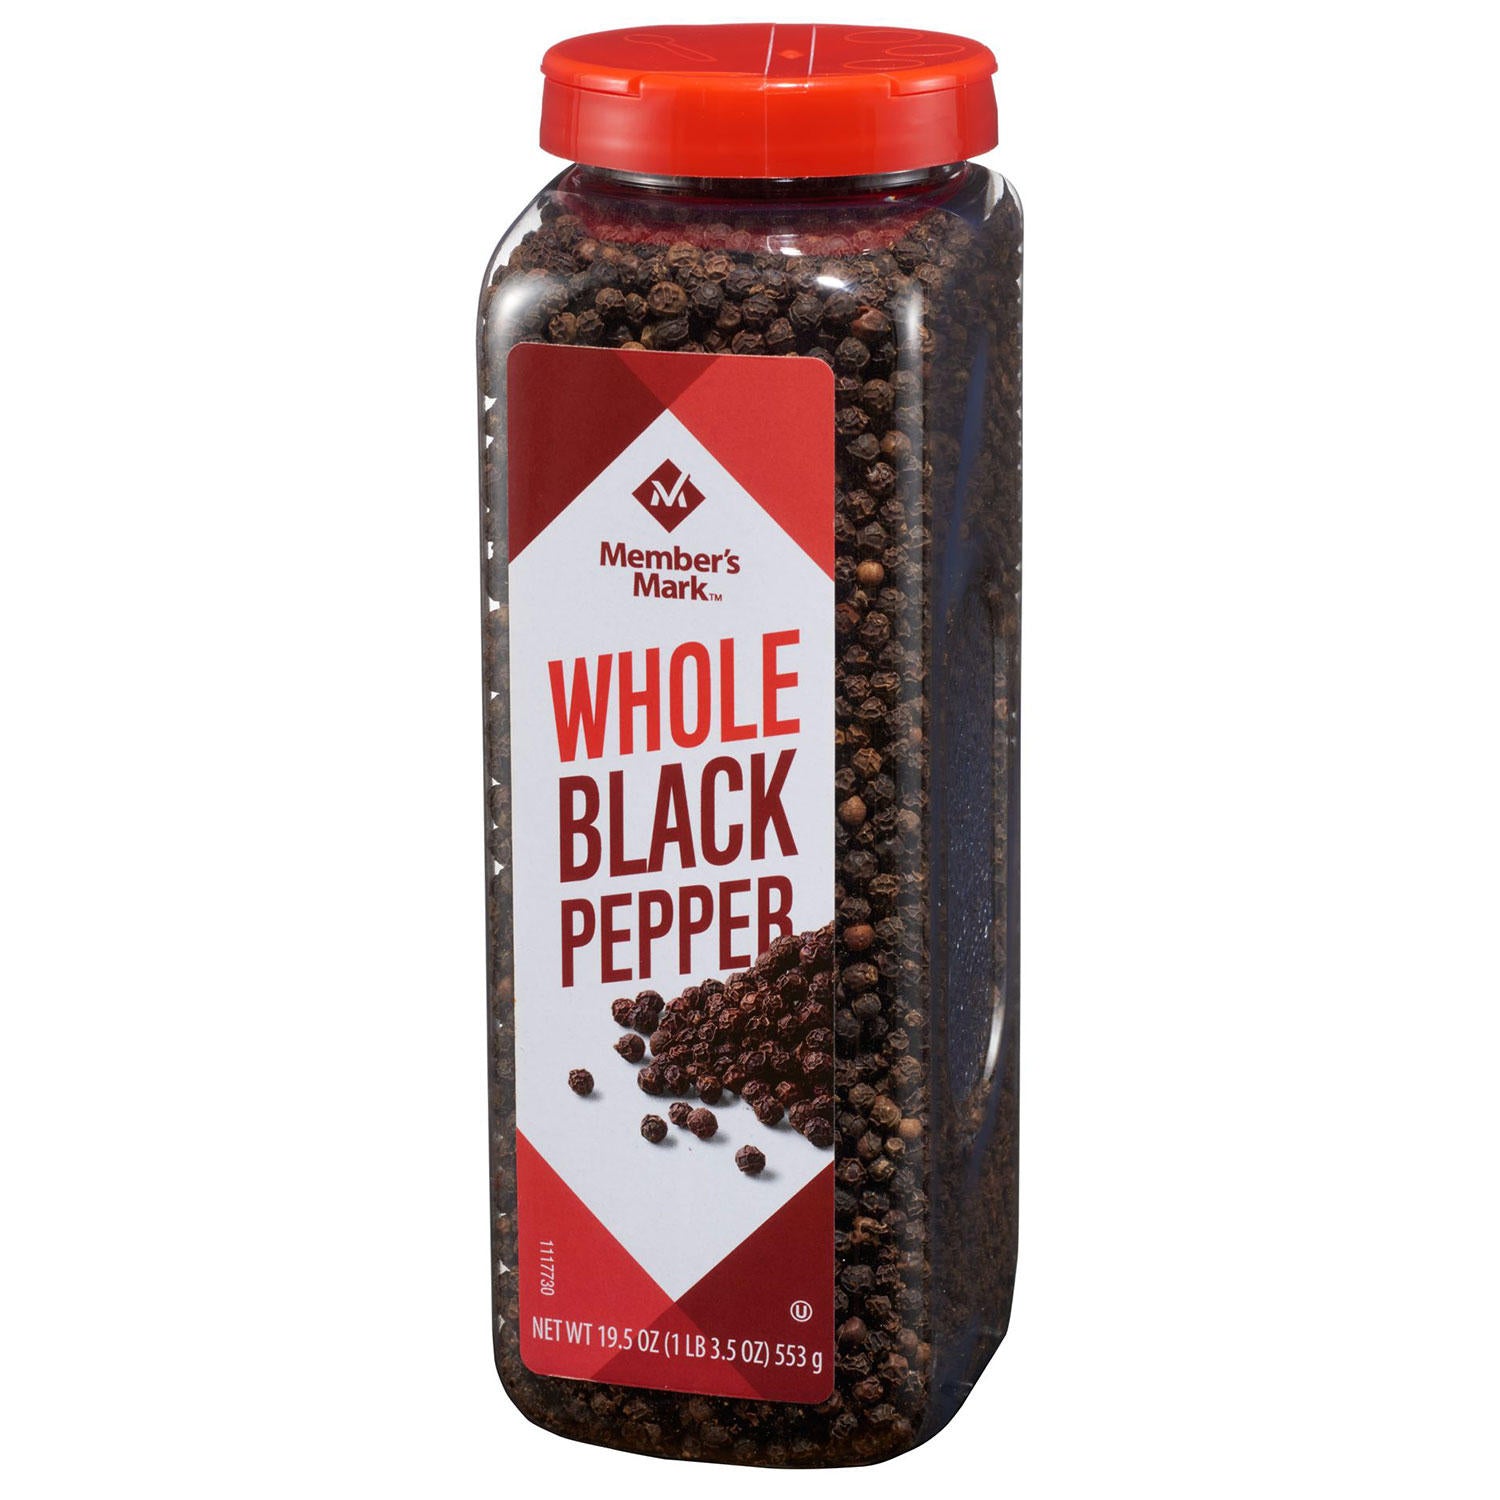 Mccormick Black Peppercorns, Whole - 3.5 oz